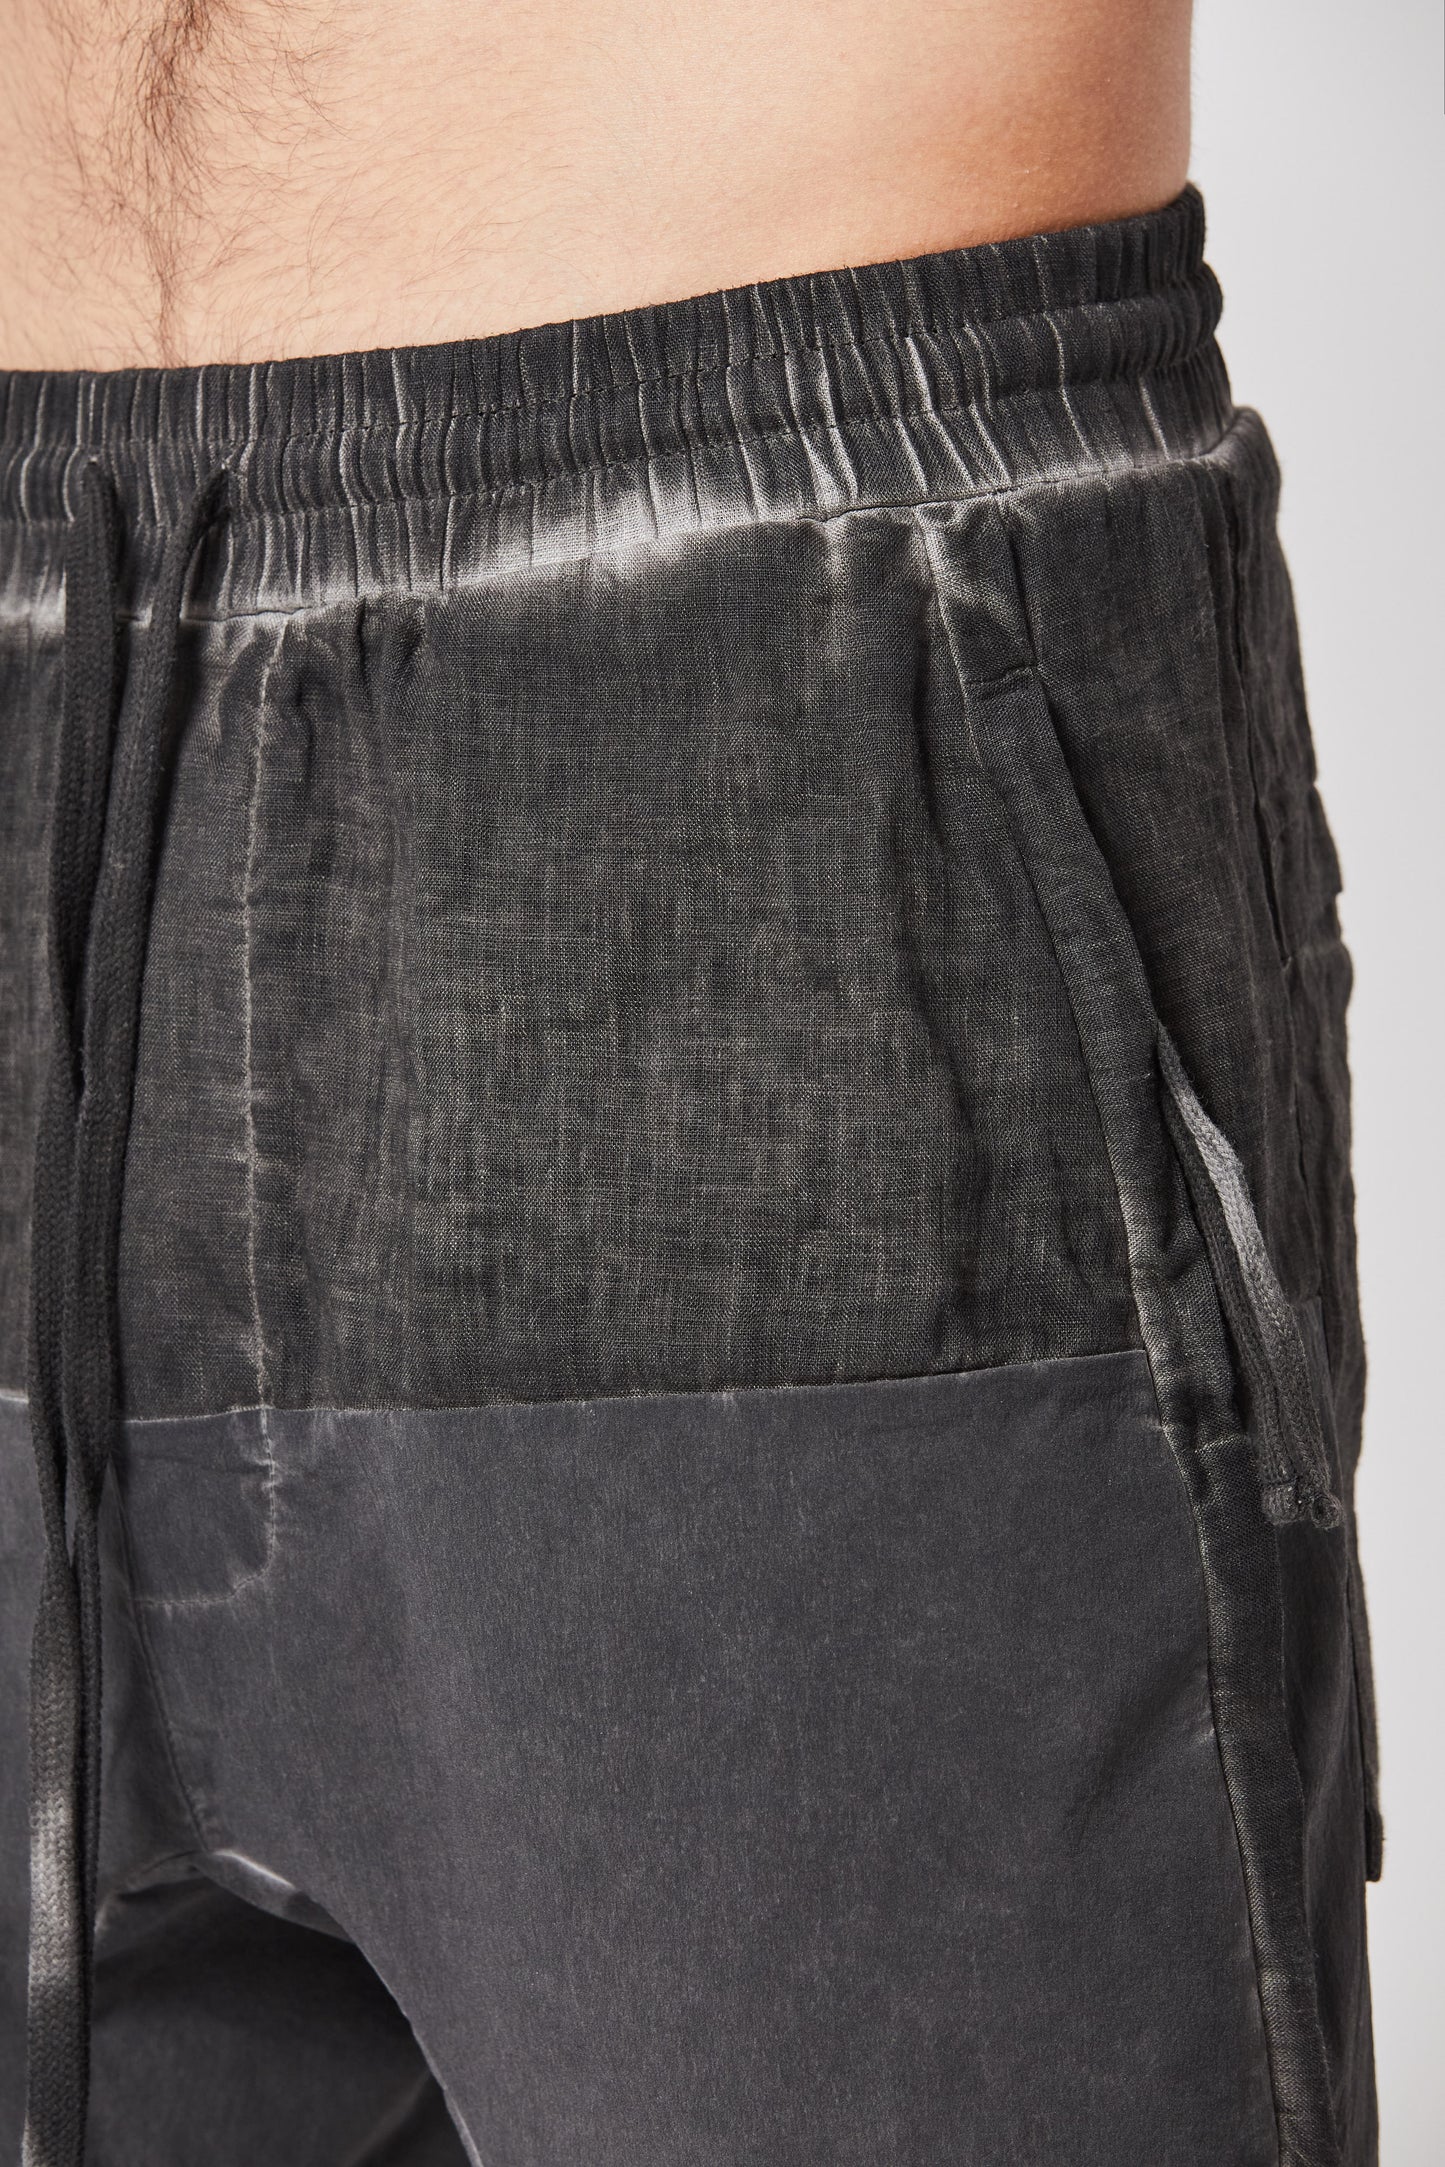 Black Oil Linen Panel Stretch Nylon Drop Crotch Shorts MST 351